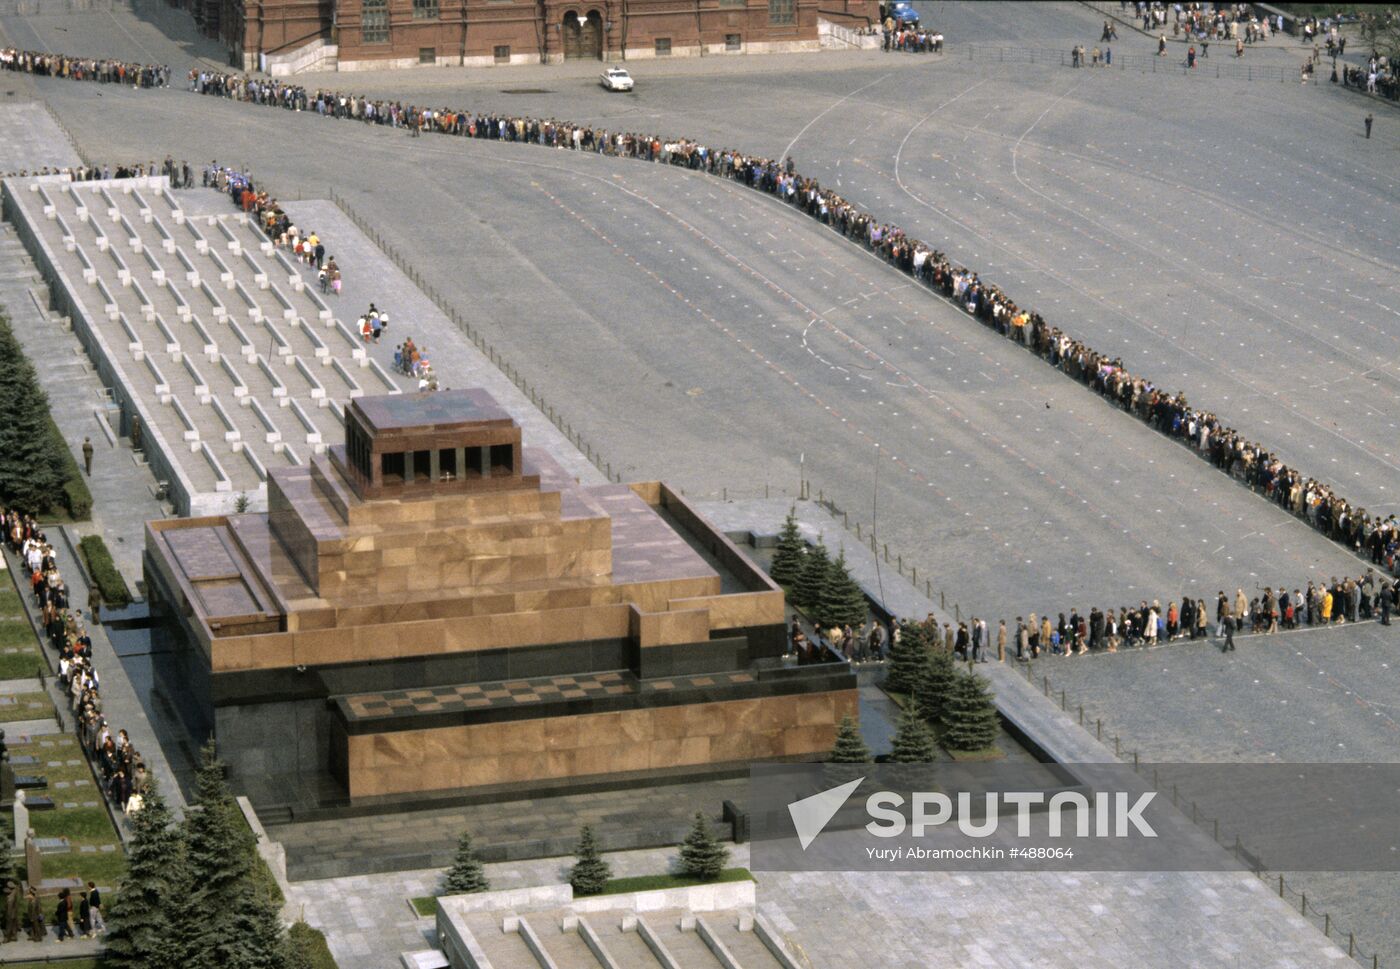 Line to Vladimir Lenin's Mausoleum on Red Square